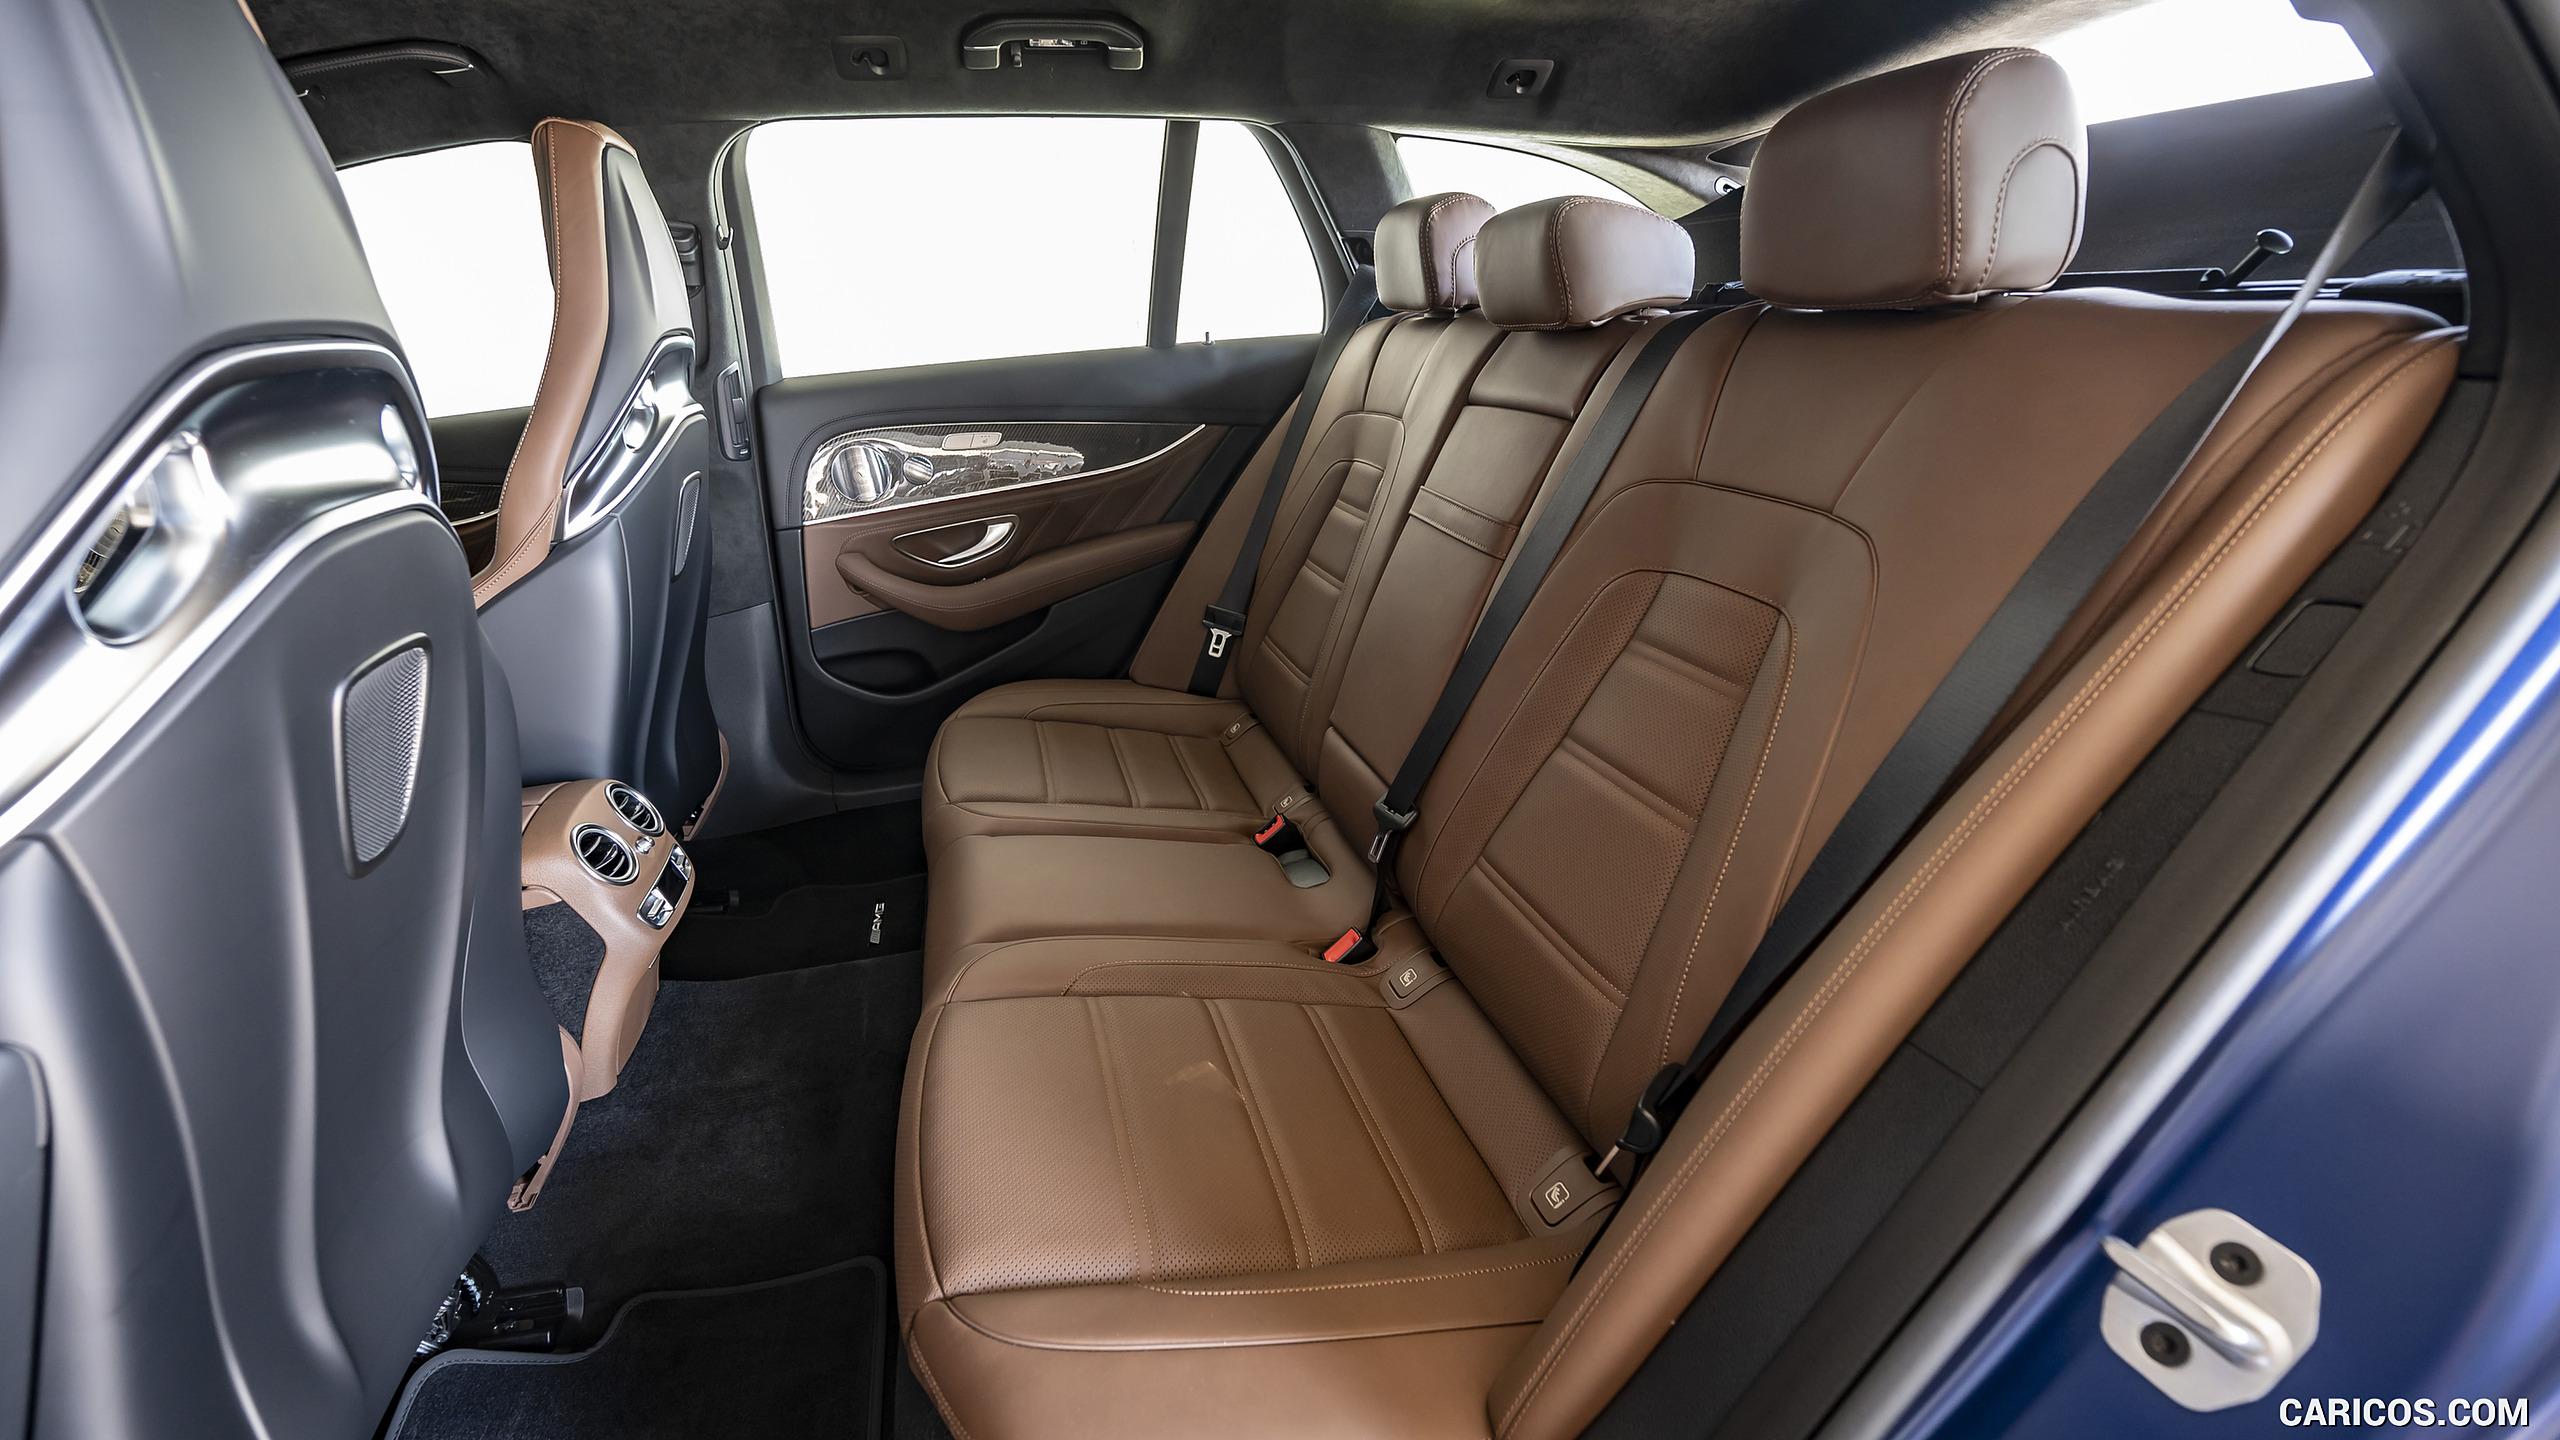 2021 Mercedes-AMG E 63 S Estate 4MATIC+ - Interior, Rear Seats, #92 of 95